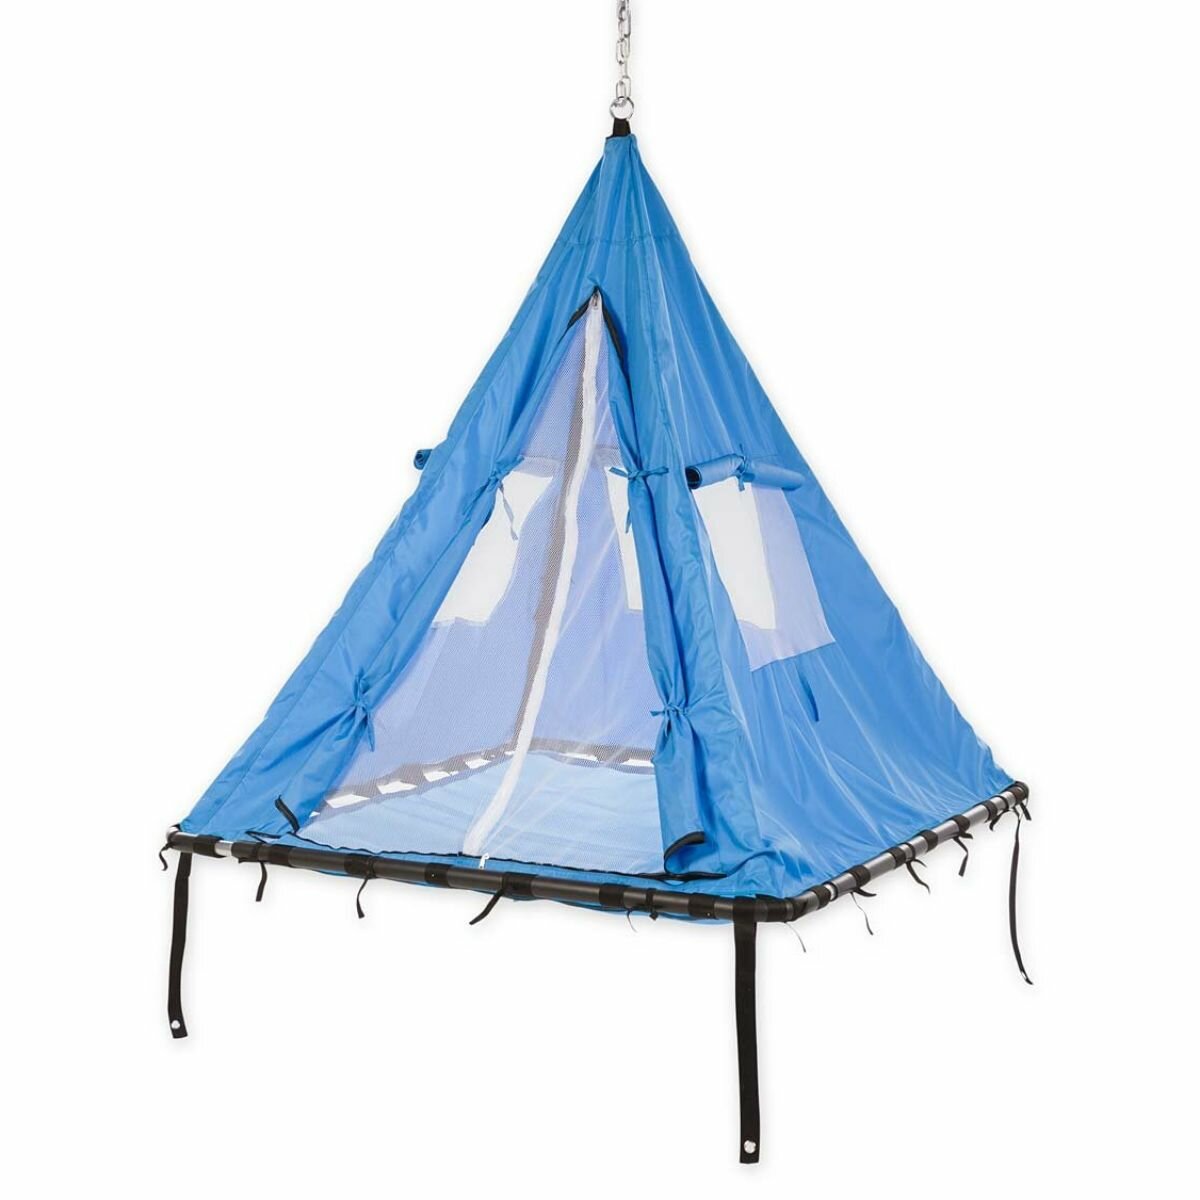 2 Heavy Duty Hammock Hanging or swing or anchors for stuff outside tents ekorre 